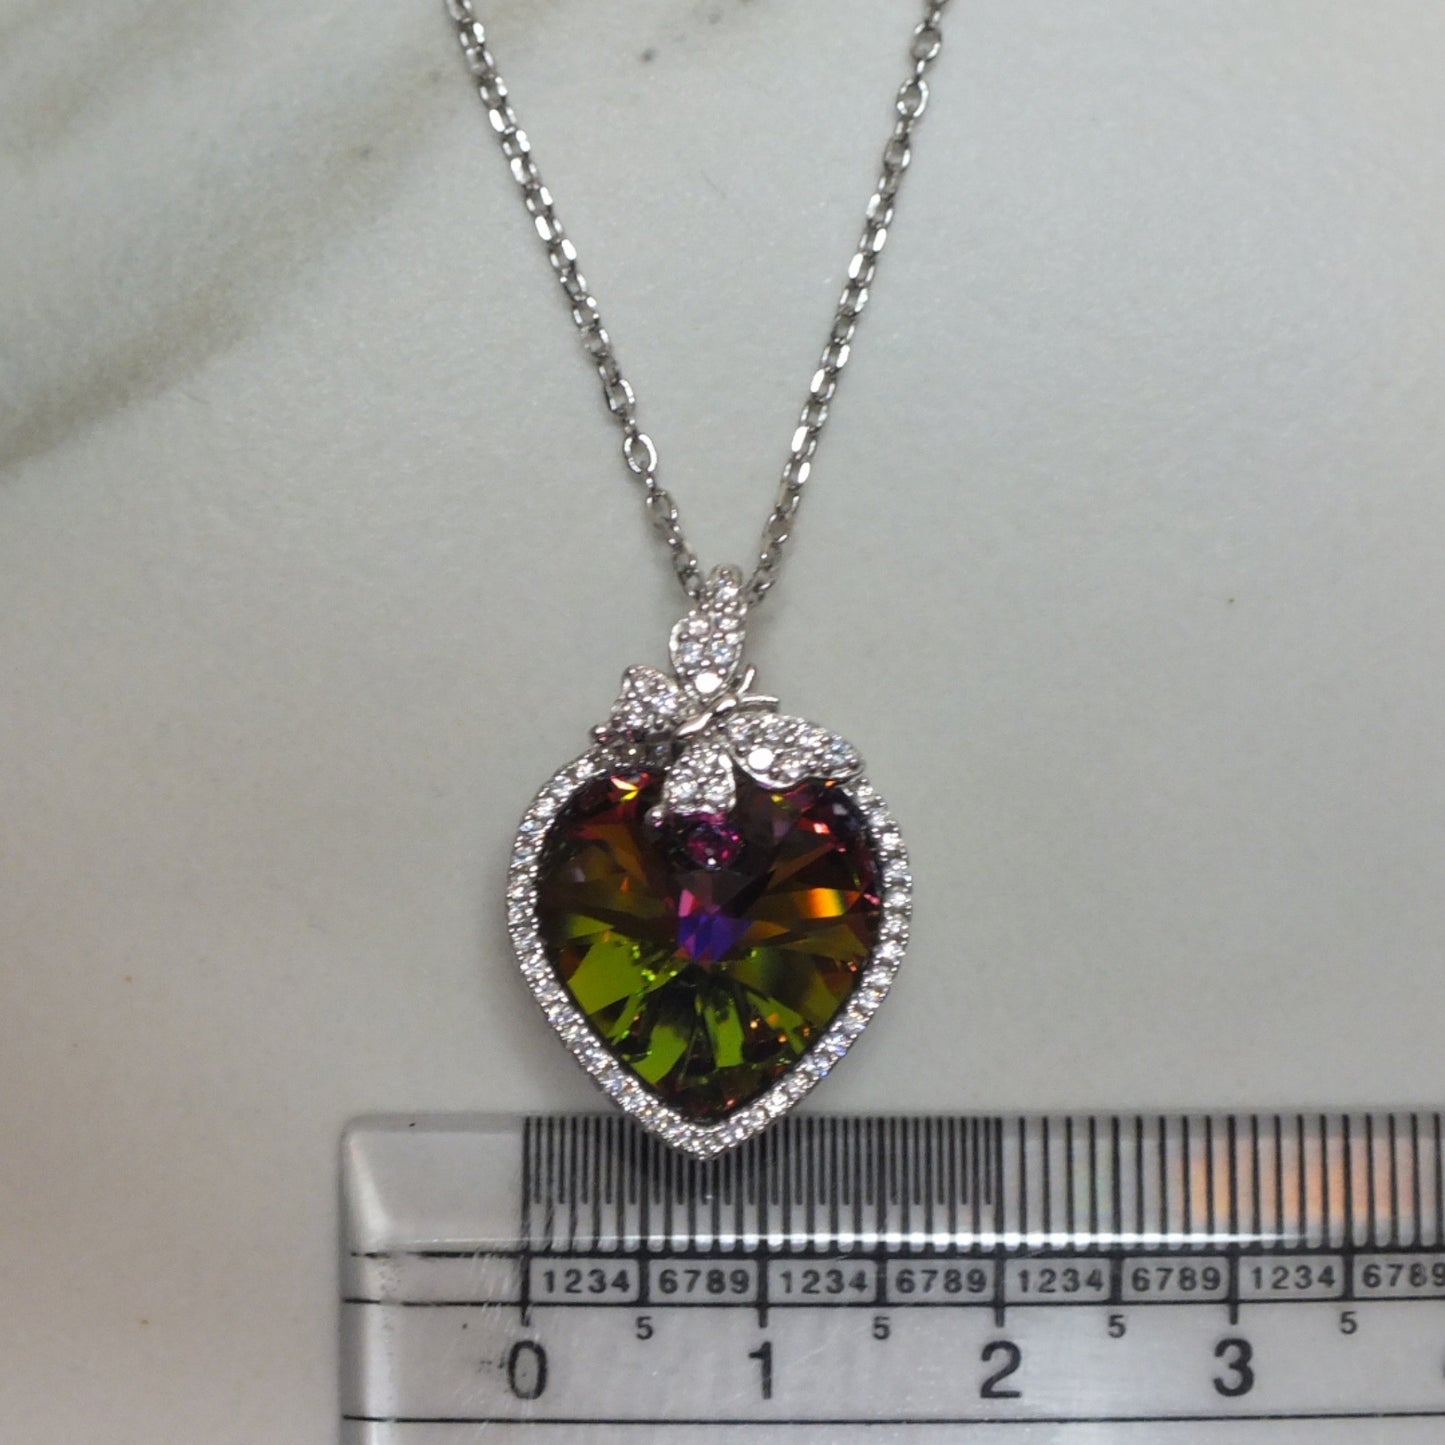 Colored Stone Necklace- سلسال فضة حجر ملون⁩